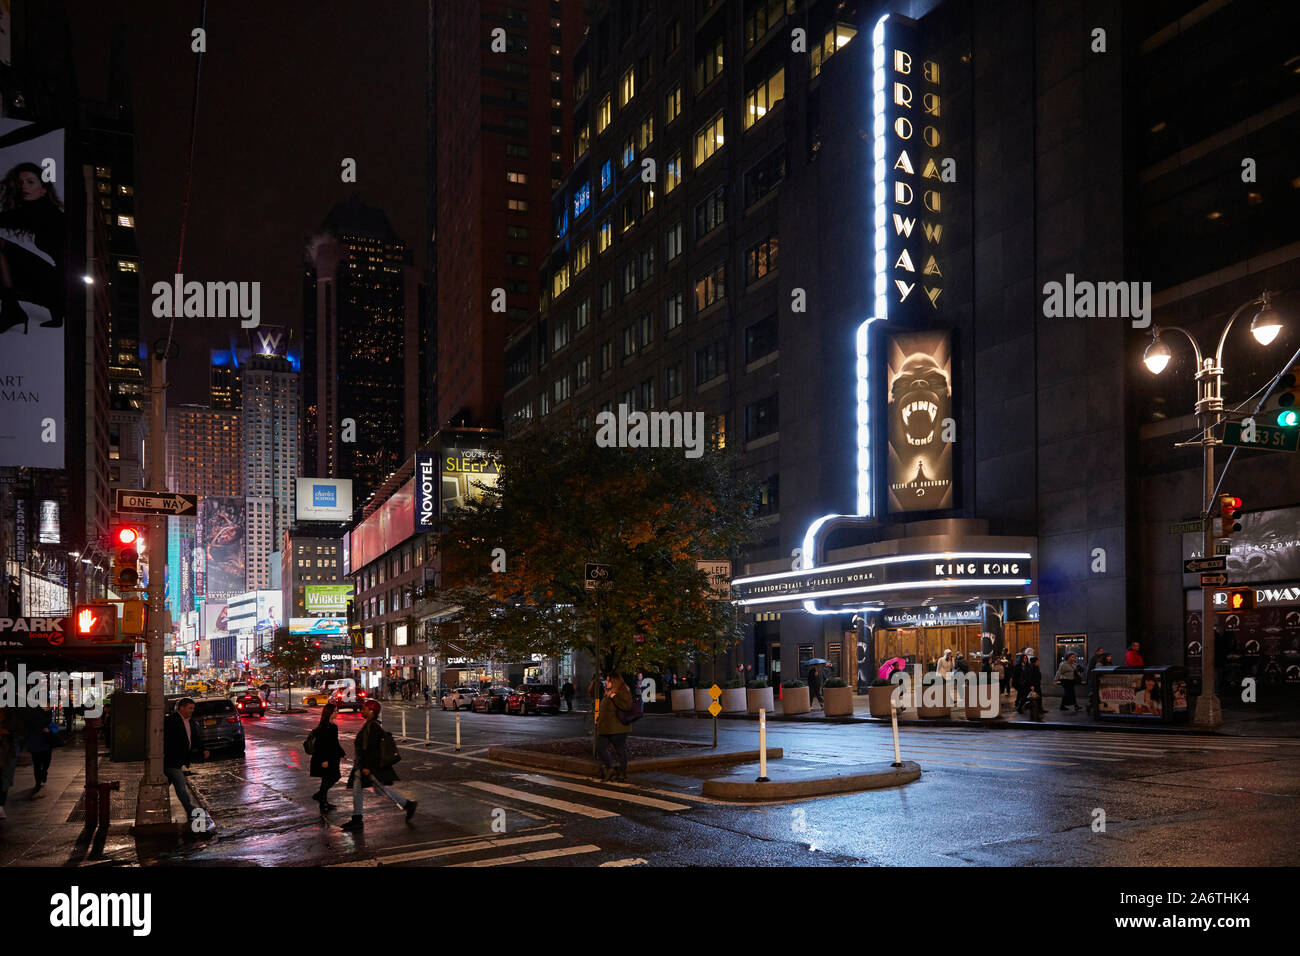 King Kong Musical am Broadway Theatre, New York, USA. Stockfoto